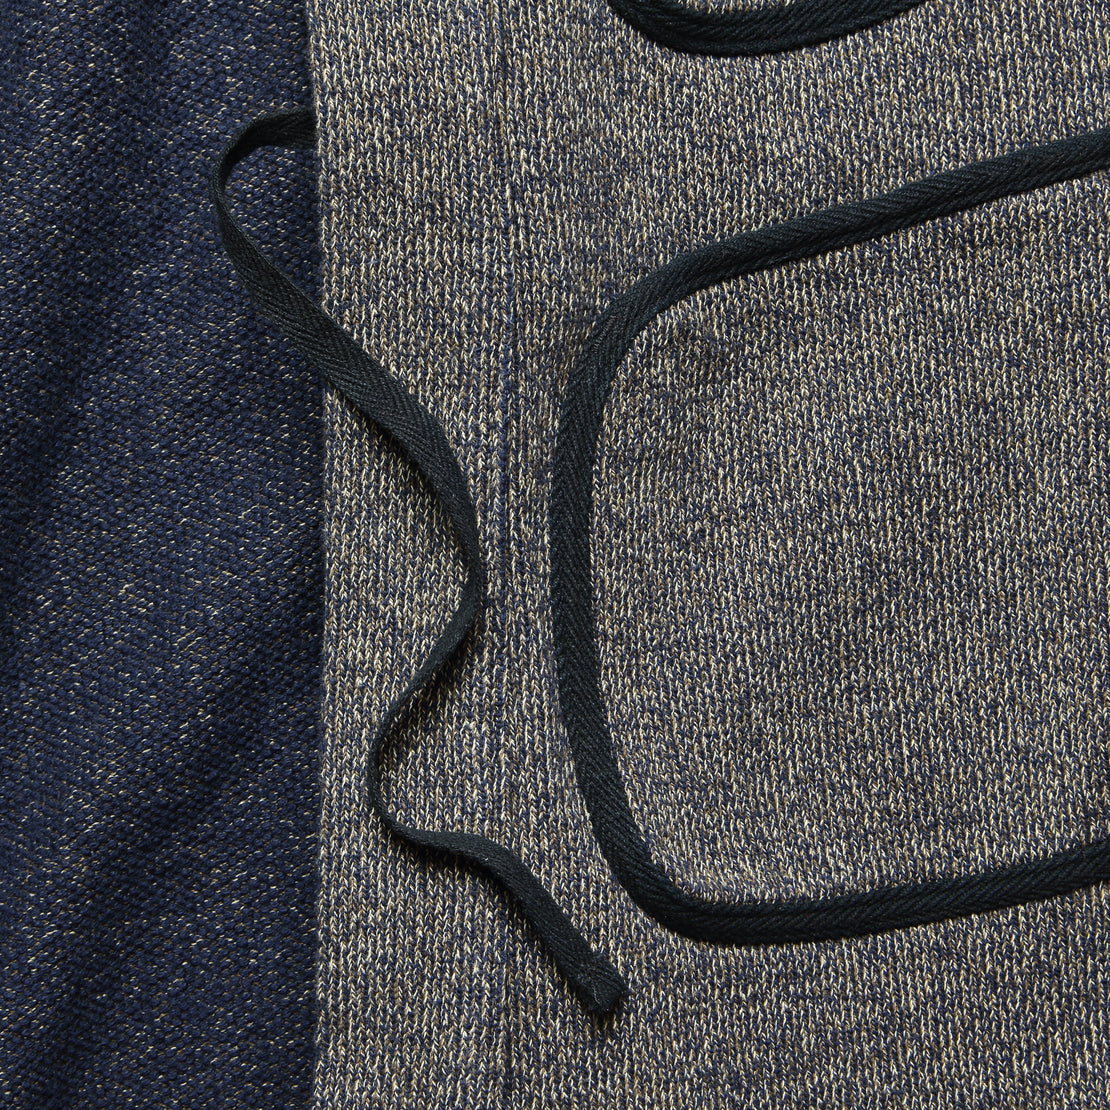 Beach Knit Kakashi Cardigan - Charcoal - Kapital - STAG Provisions - Tops - Sweater